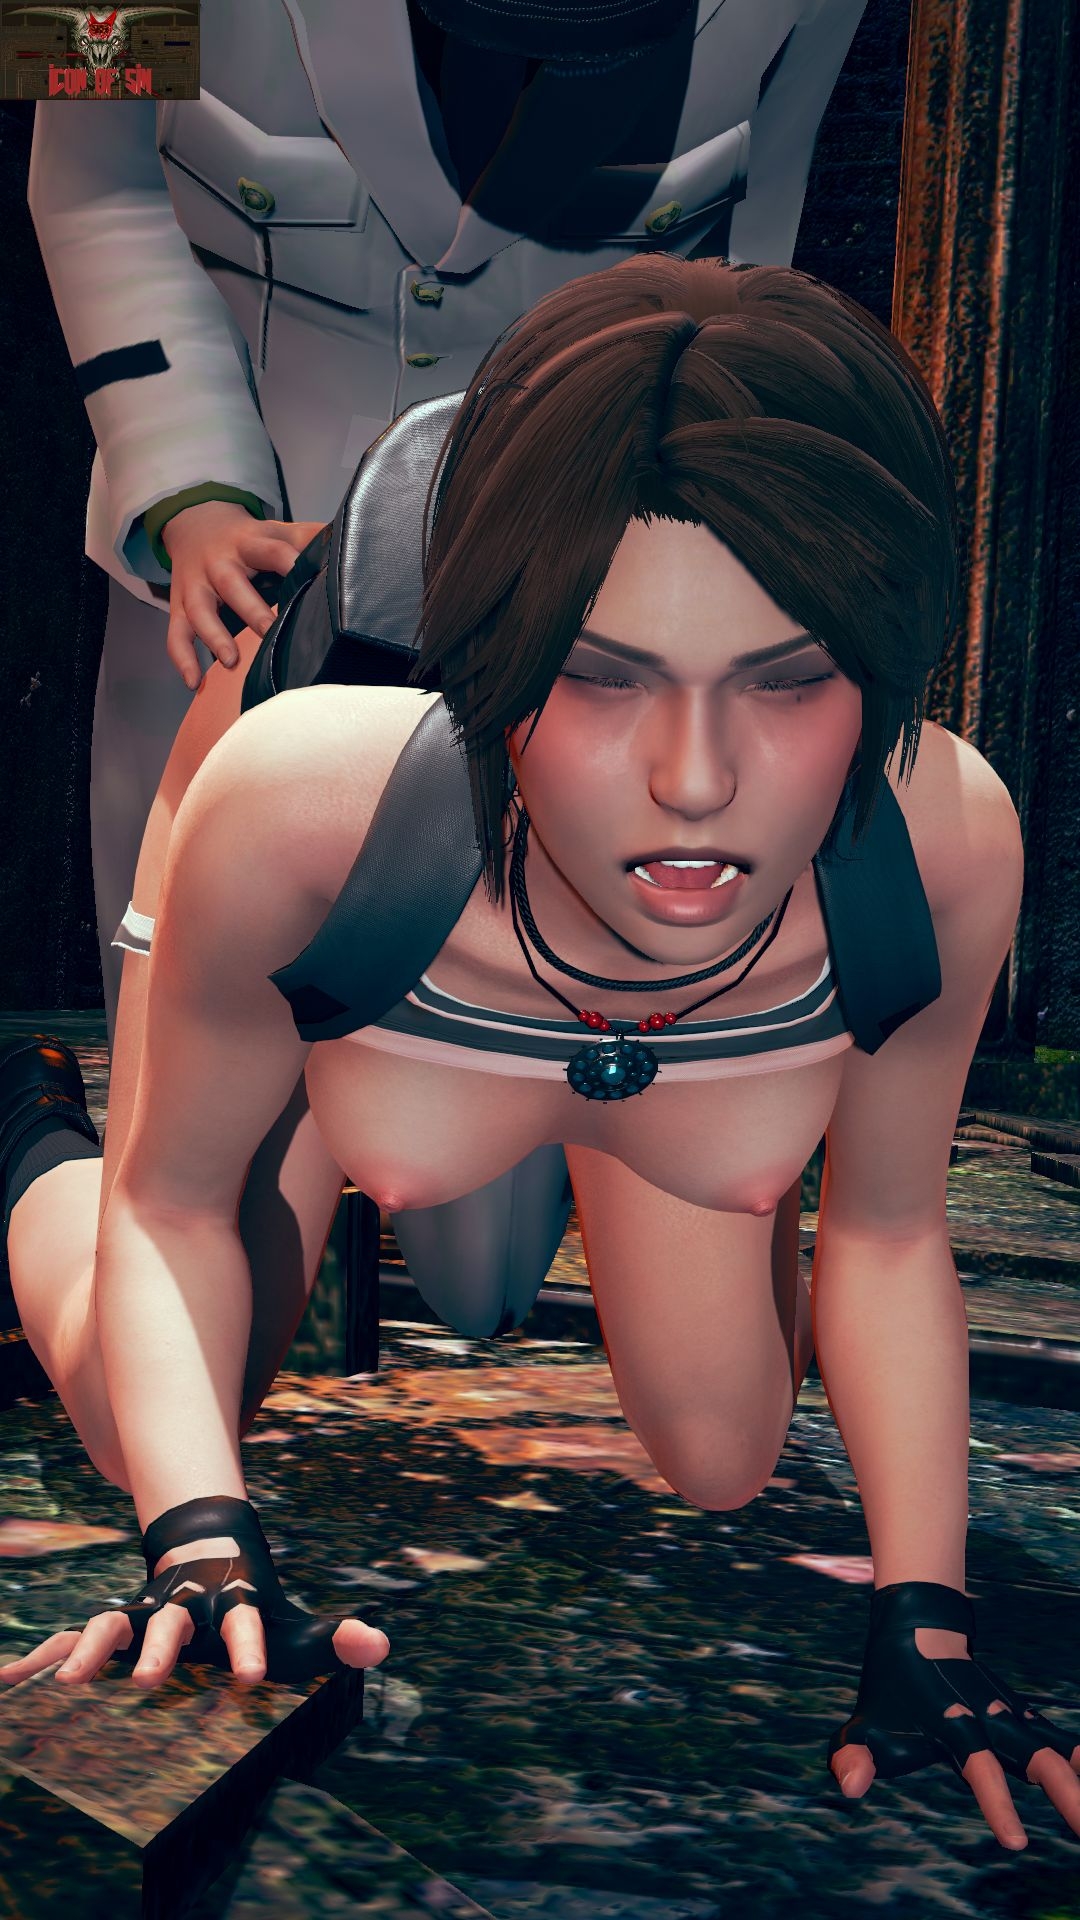 [IconOfSin] Lara's Sticky Situation 20